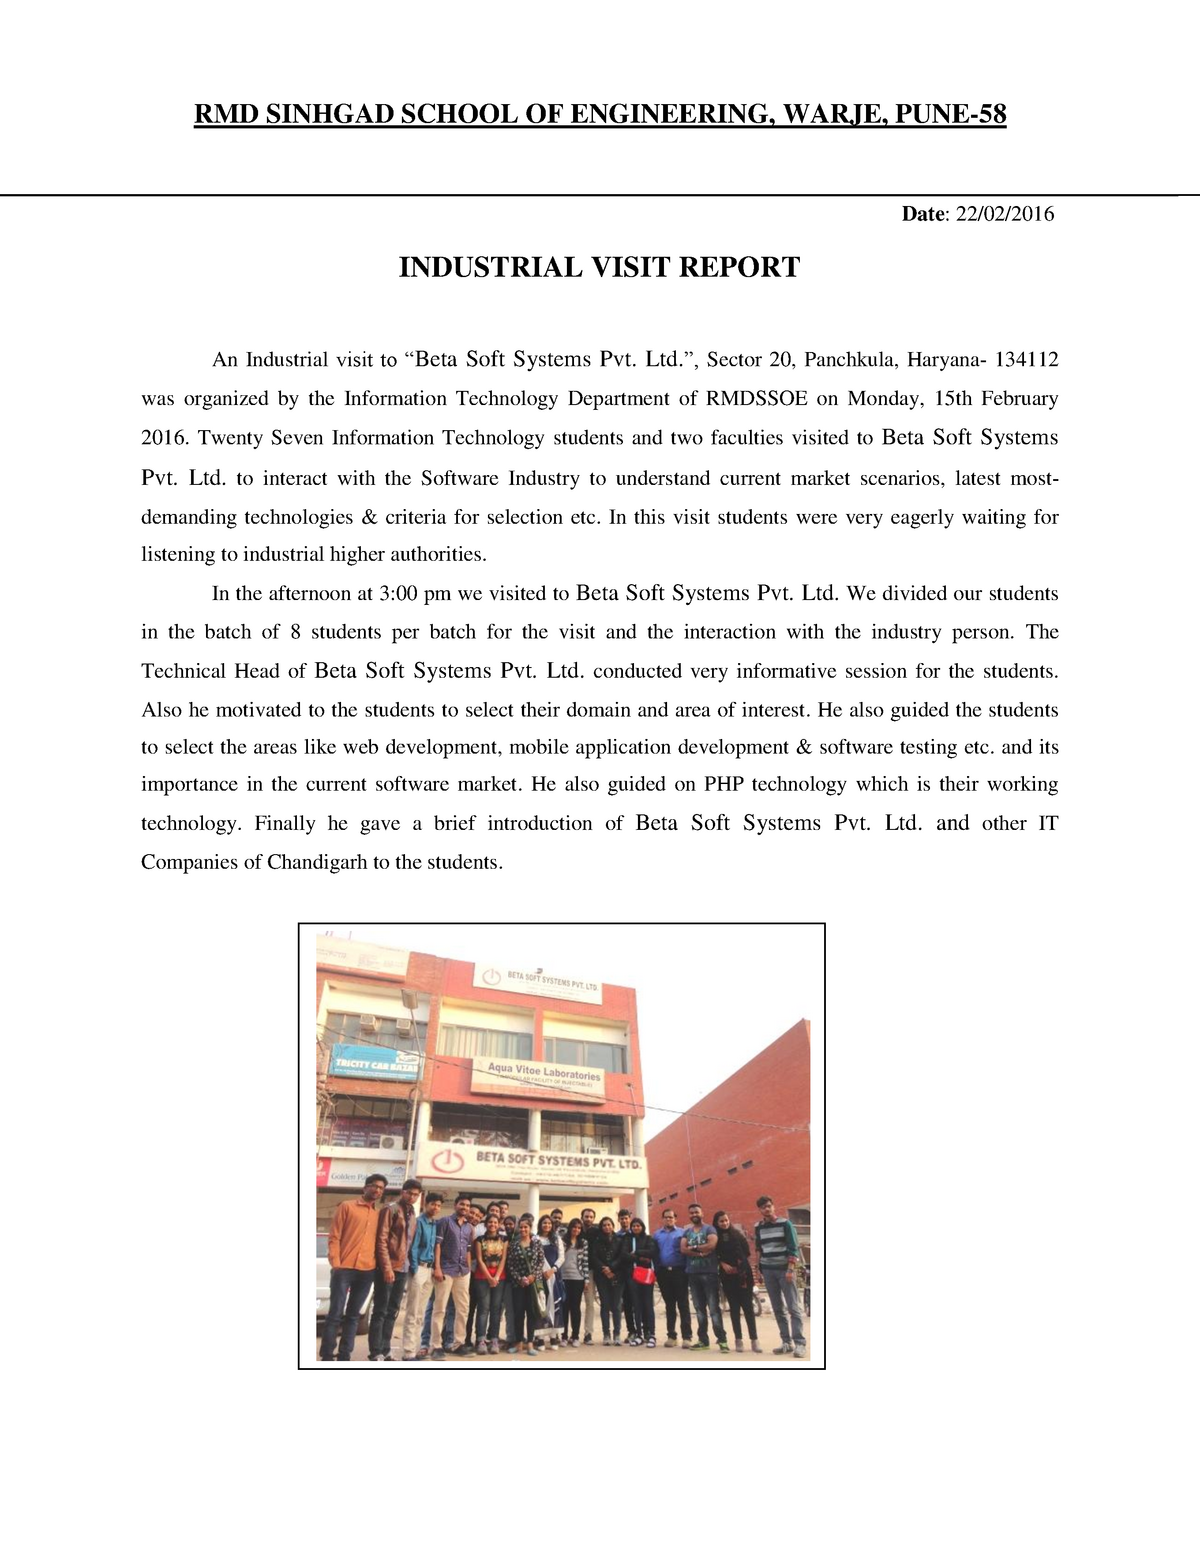 industrial visit report format pdf download